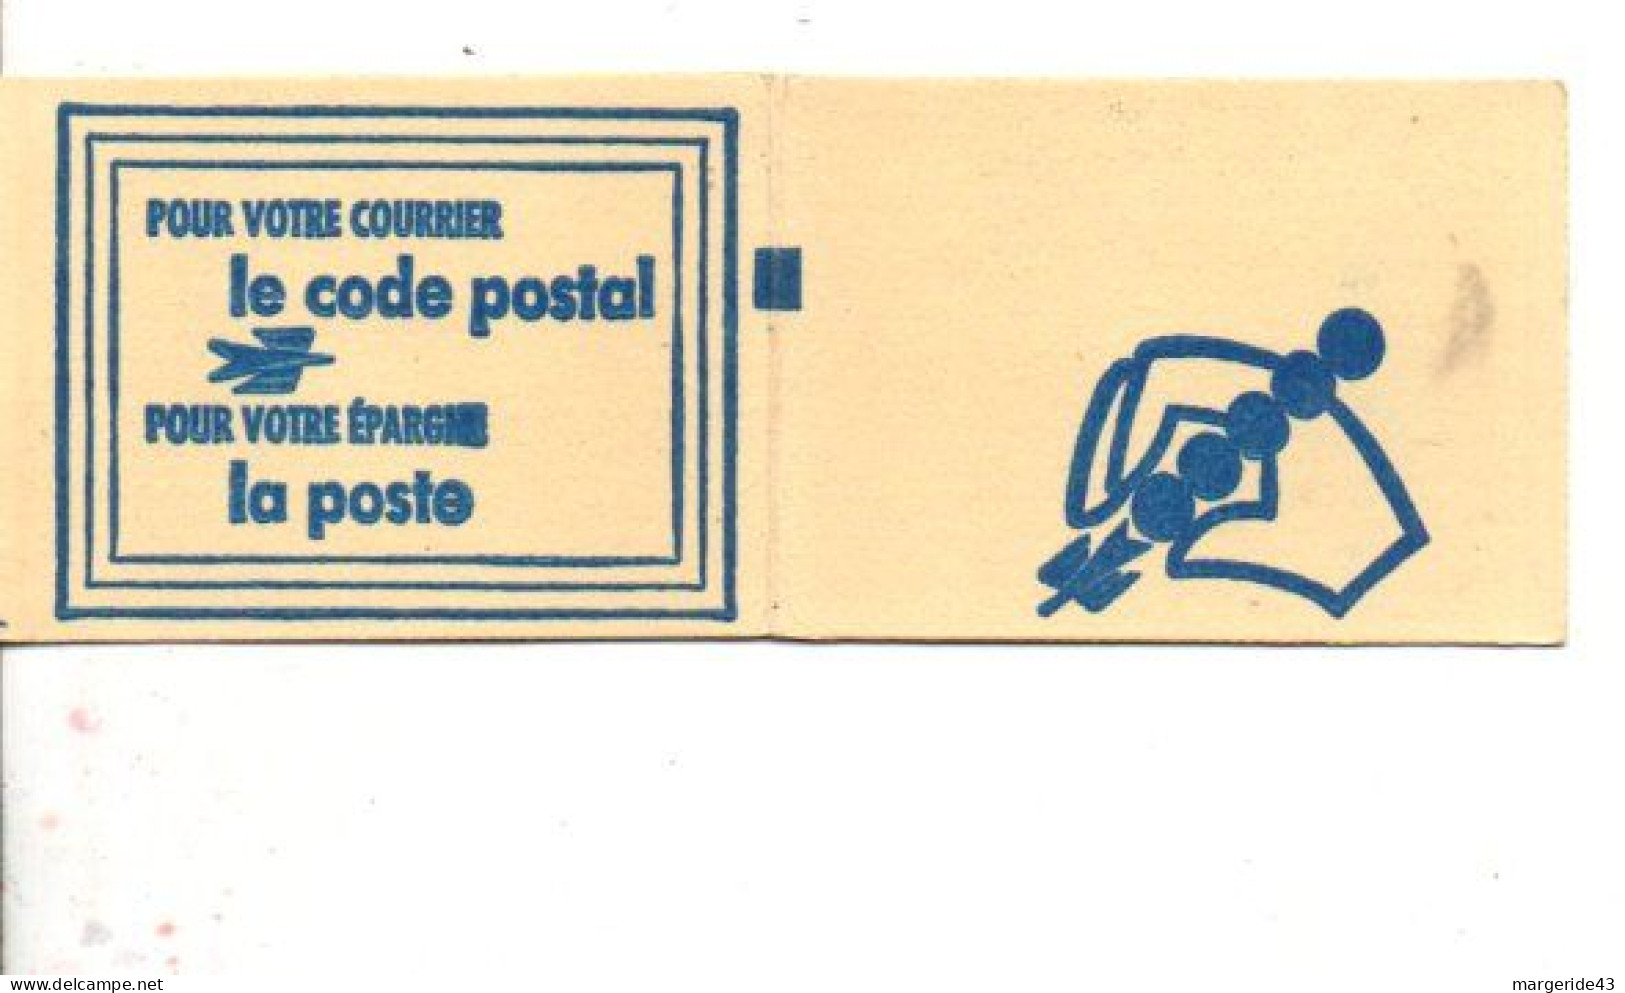 CARNET CODE POSTAL - 83100 TOULON LILAS - Blokken & Postzegelboekjes